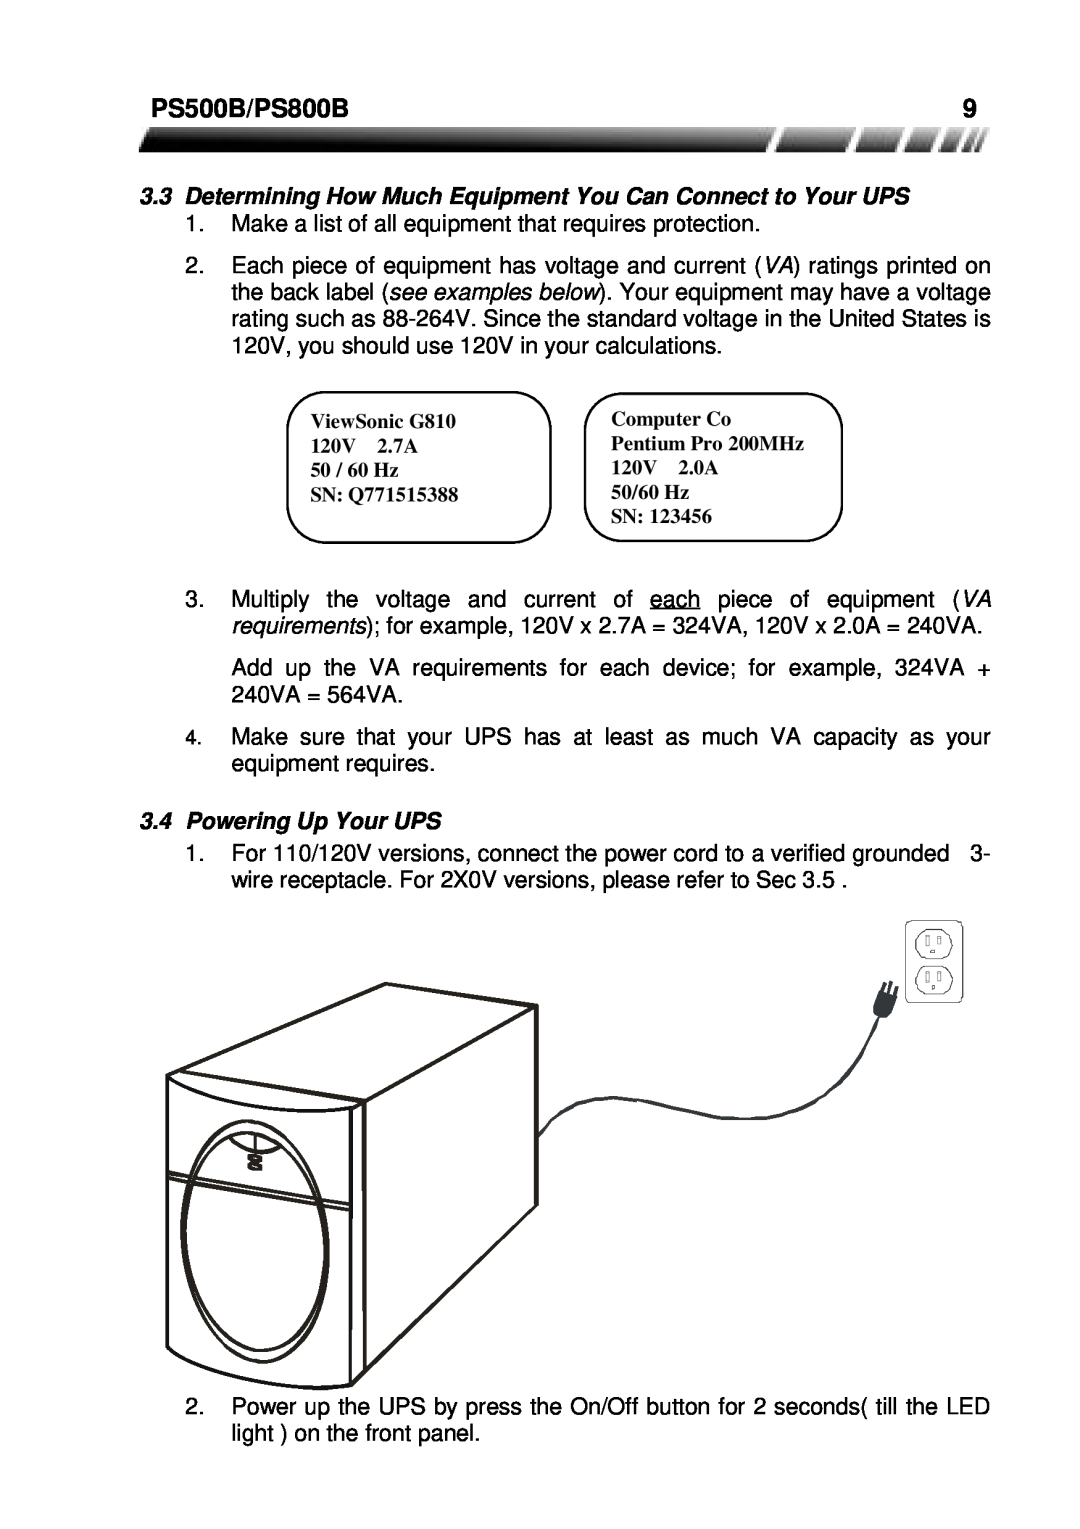 ViewSonic manual PS500B/PS800B, Powering Up Your UPS 